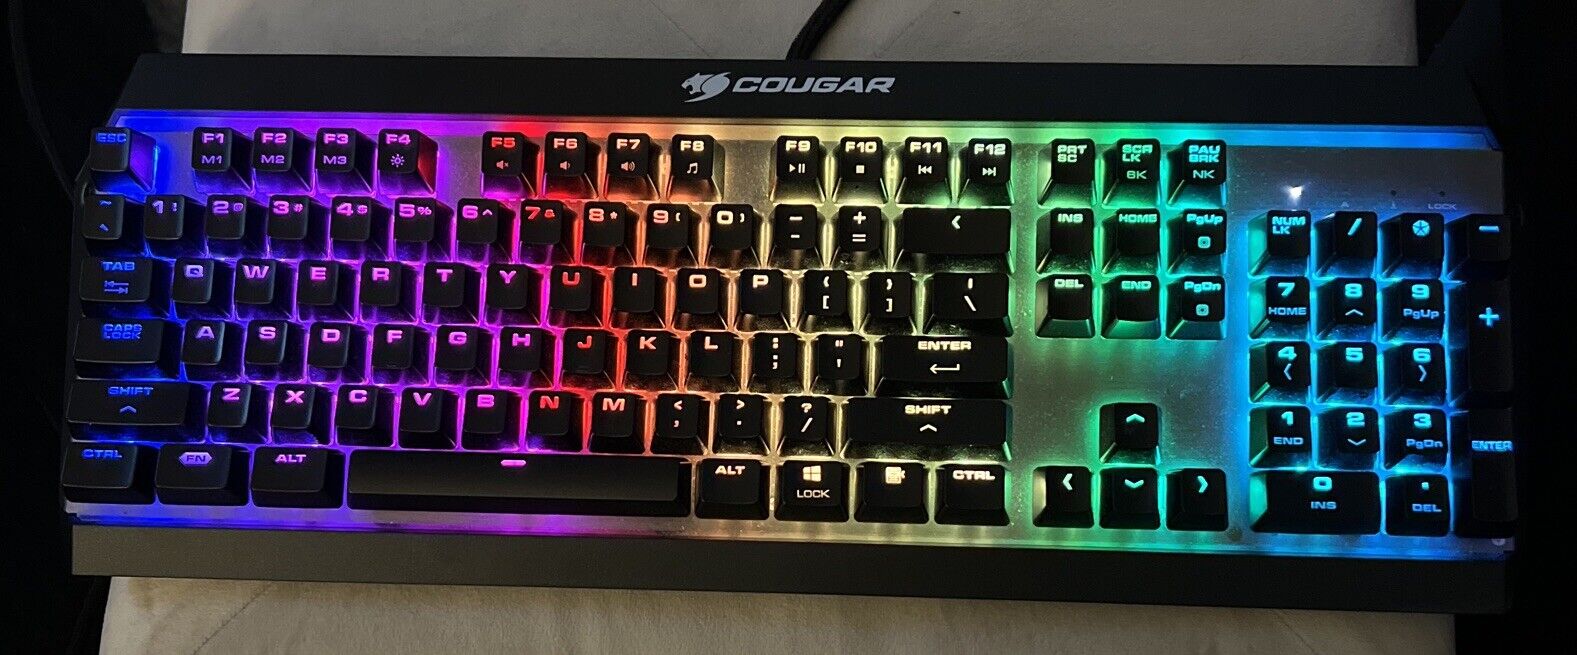 Cougar Gaming Attack X3 RGB Cherry MX RGB Mechanical Gaming Keyboard, TESTED Y